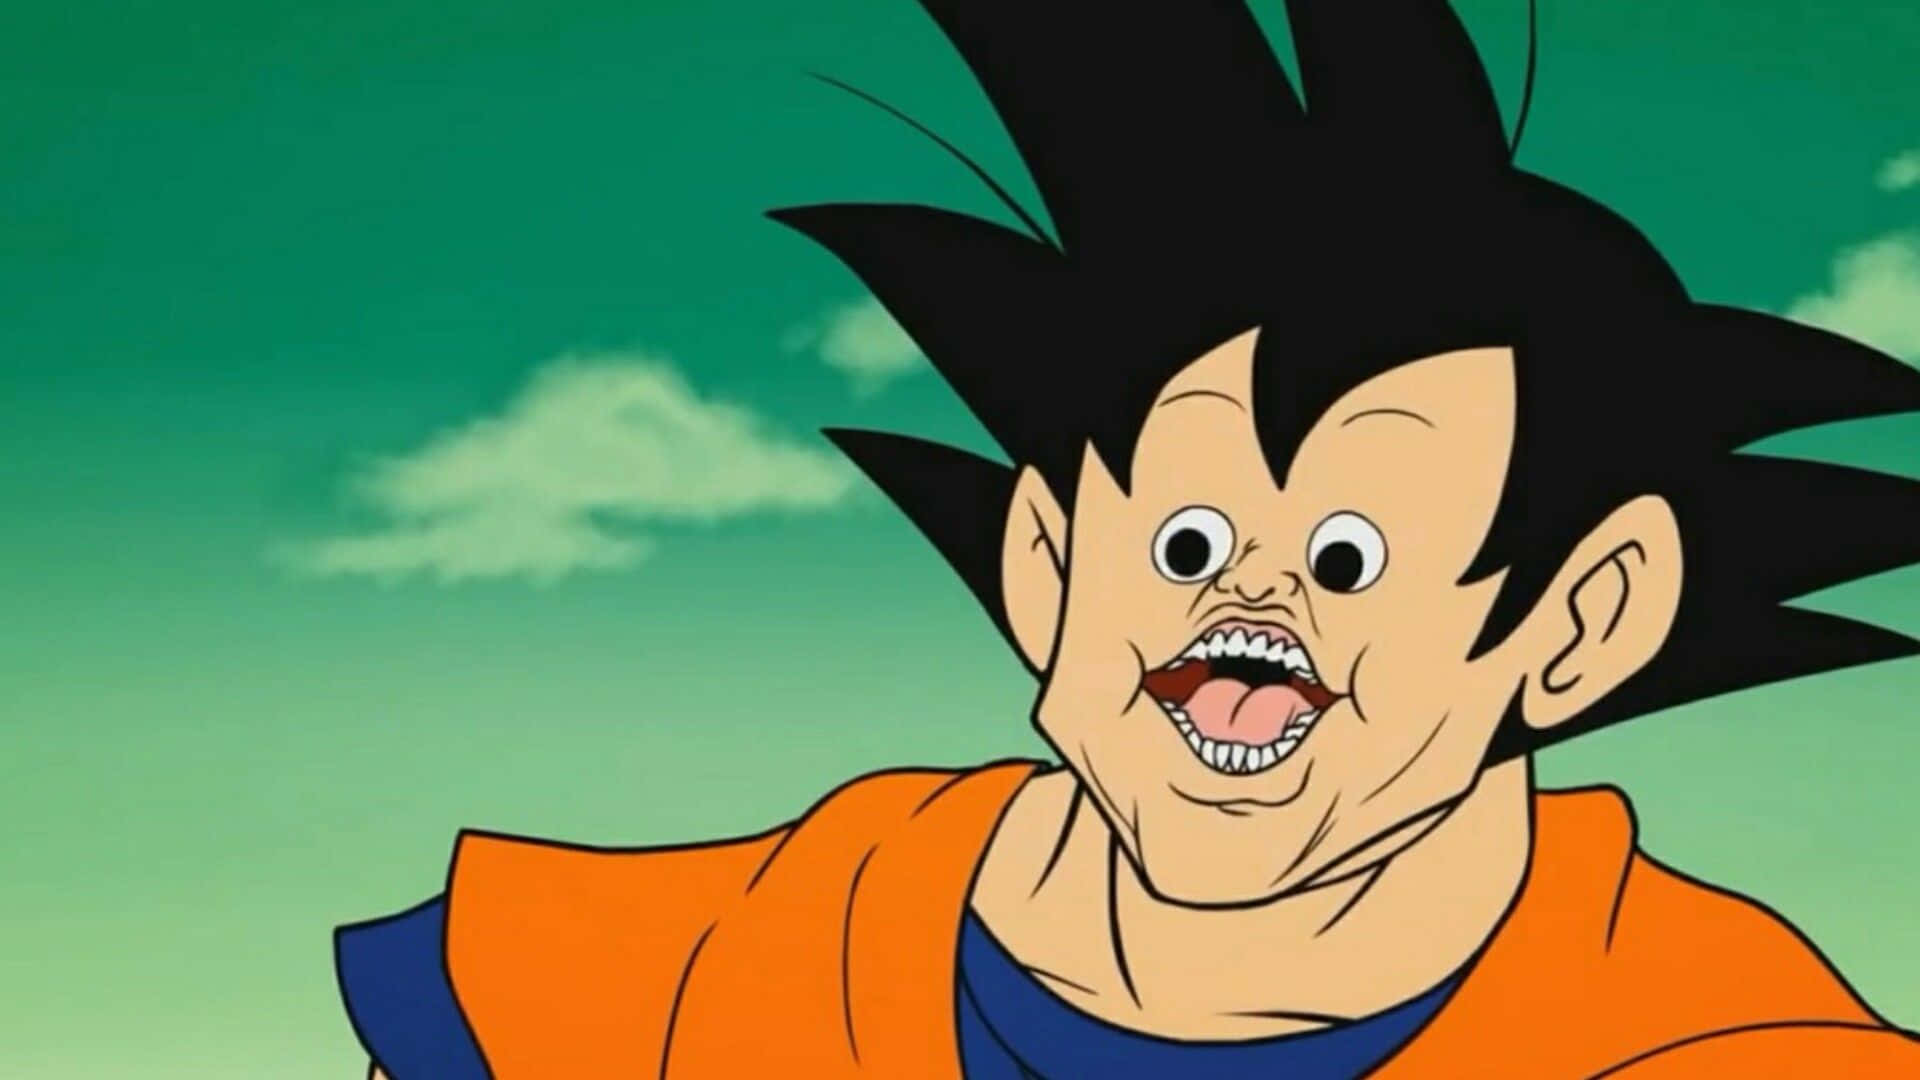 Funny Face Son Goku Background